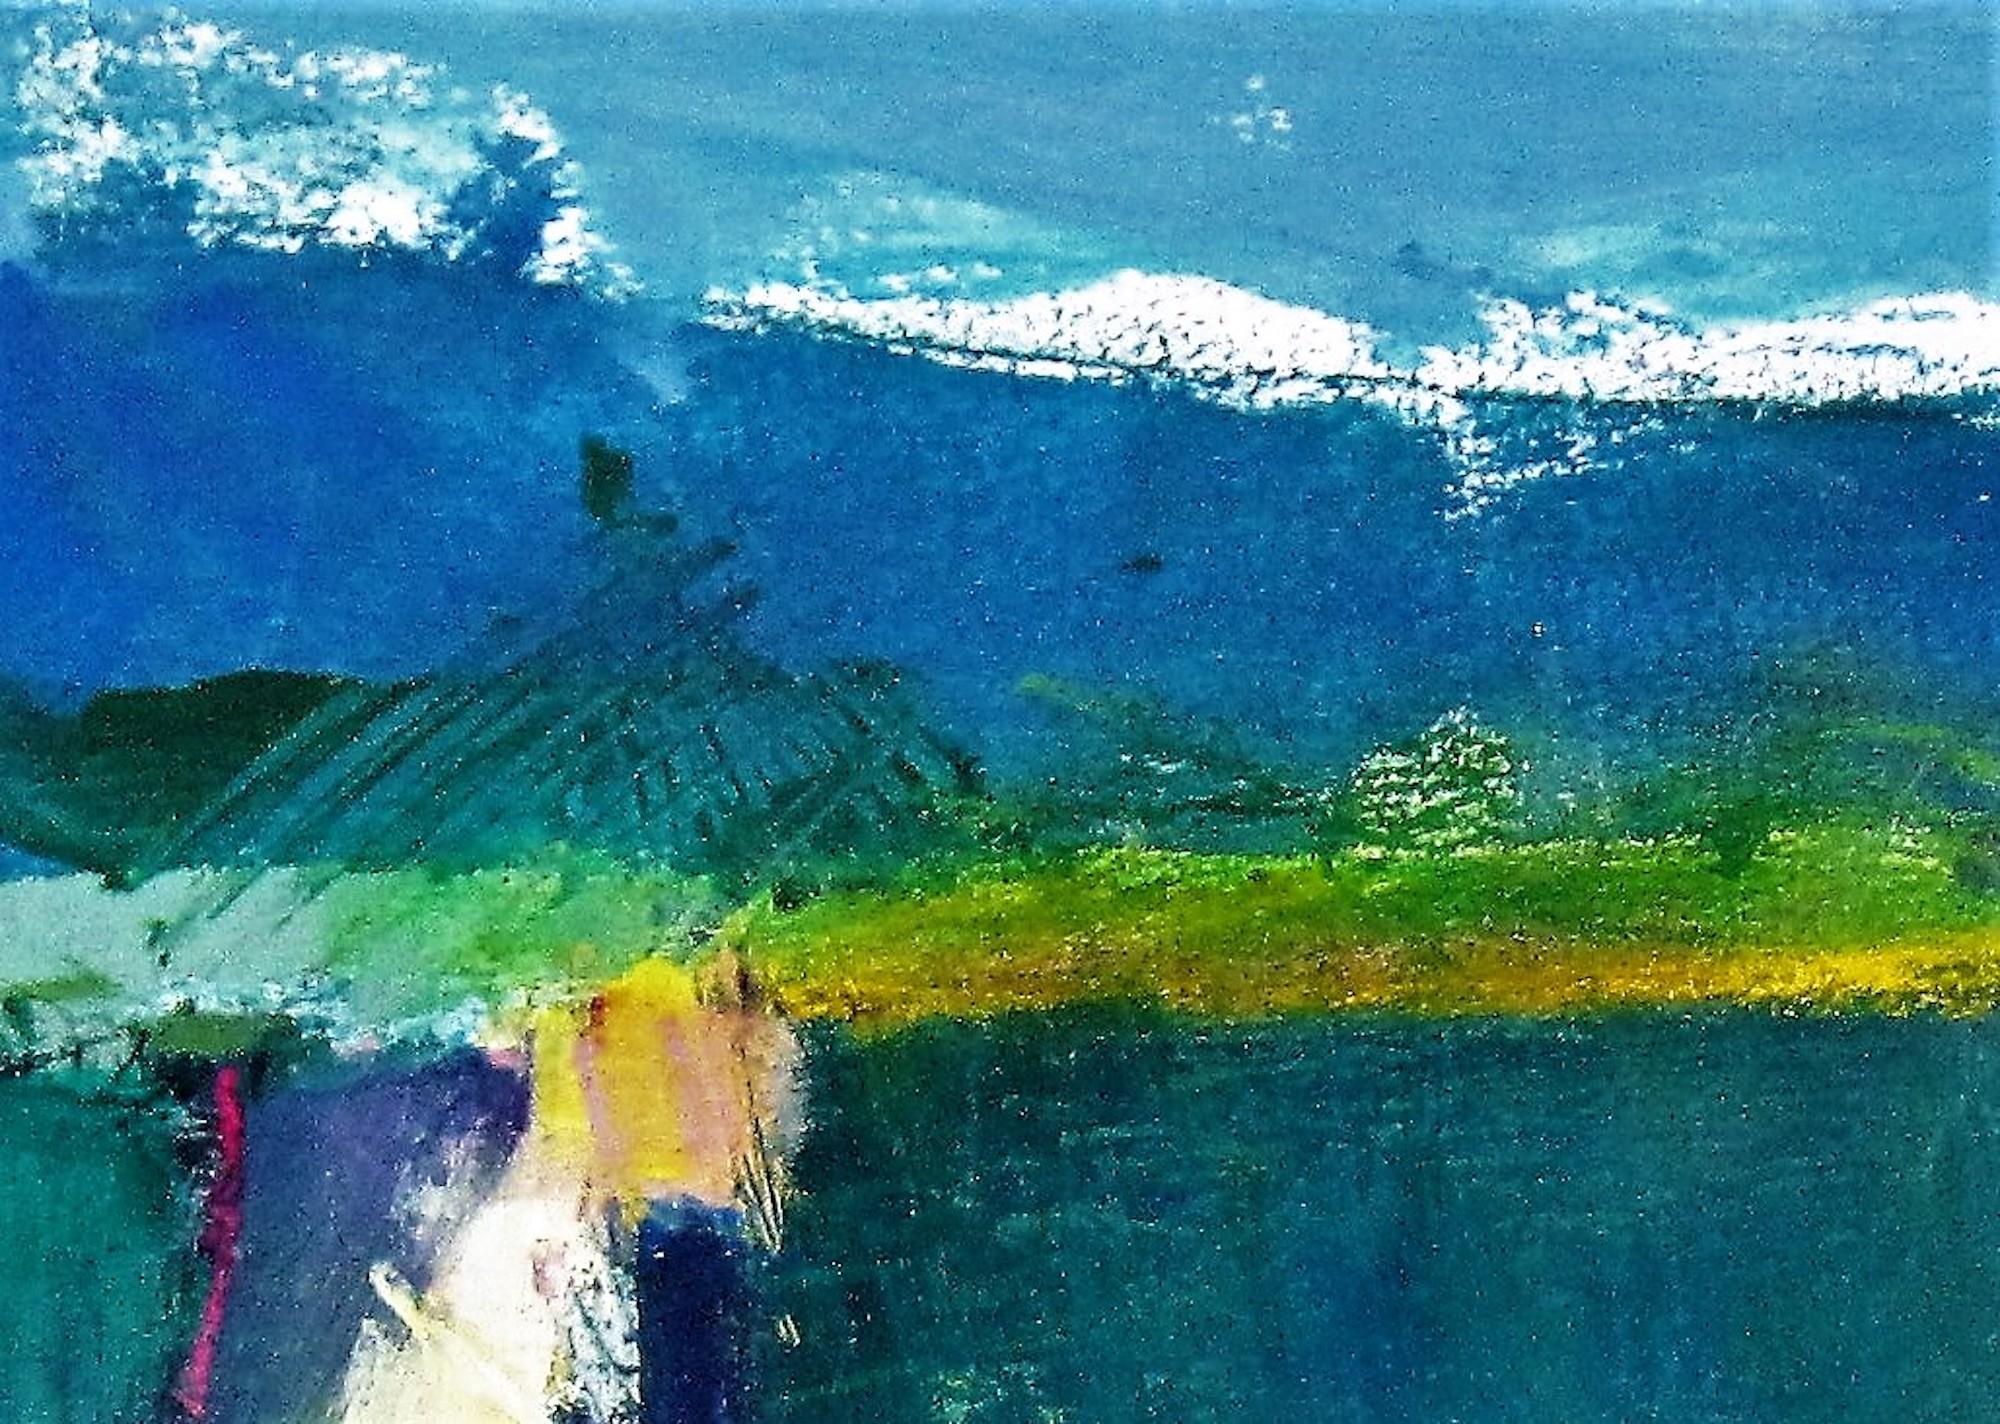 Sandbank, abstract art, landscape art, seascape art, original painting  - Blue Landscape Painting by Jon Rowland